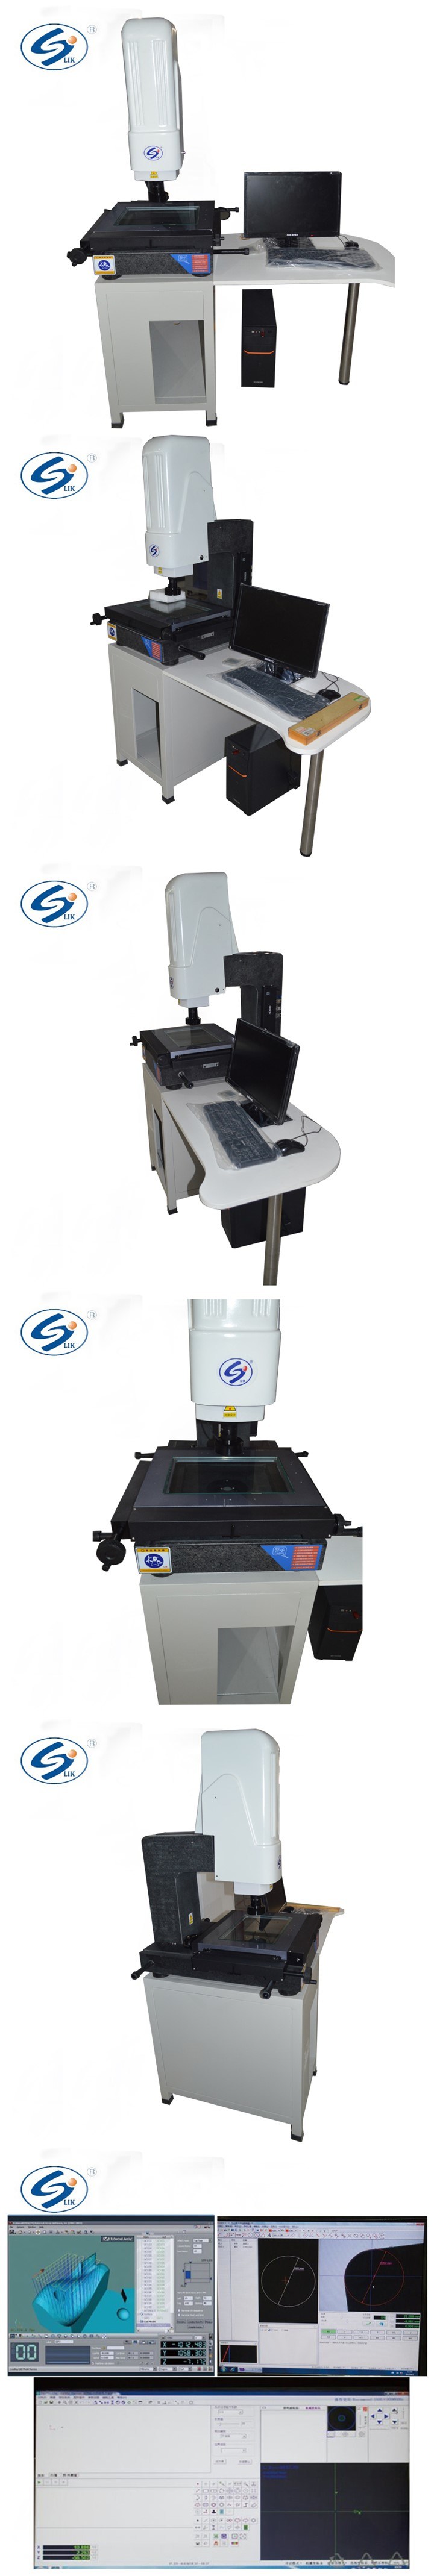 CNC High Precision Image Video Measuring Machine Instrument System